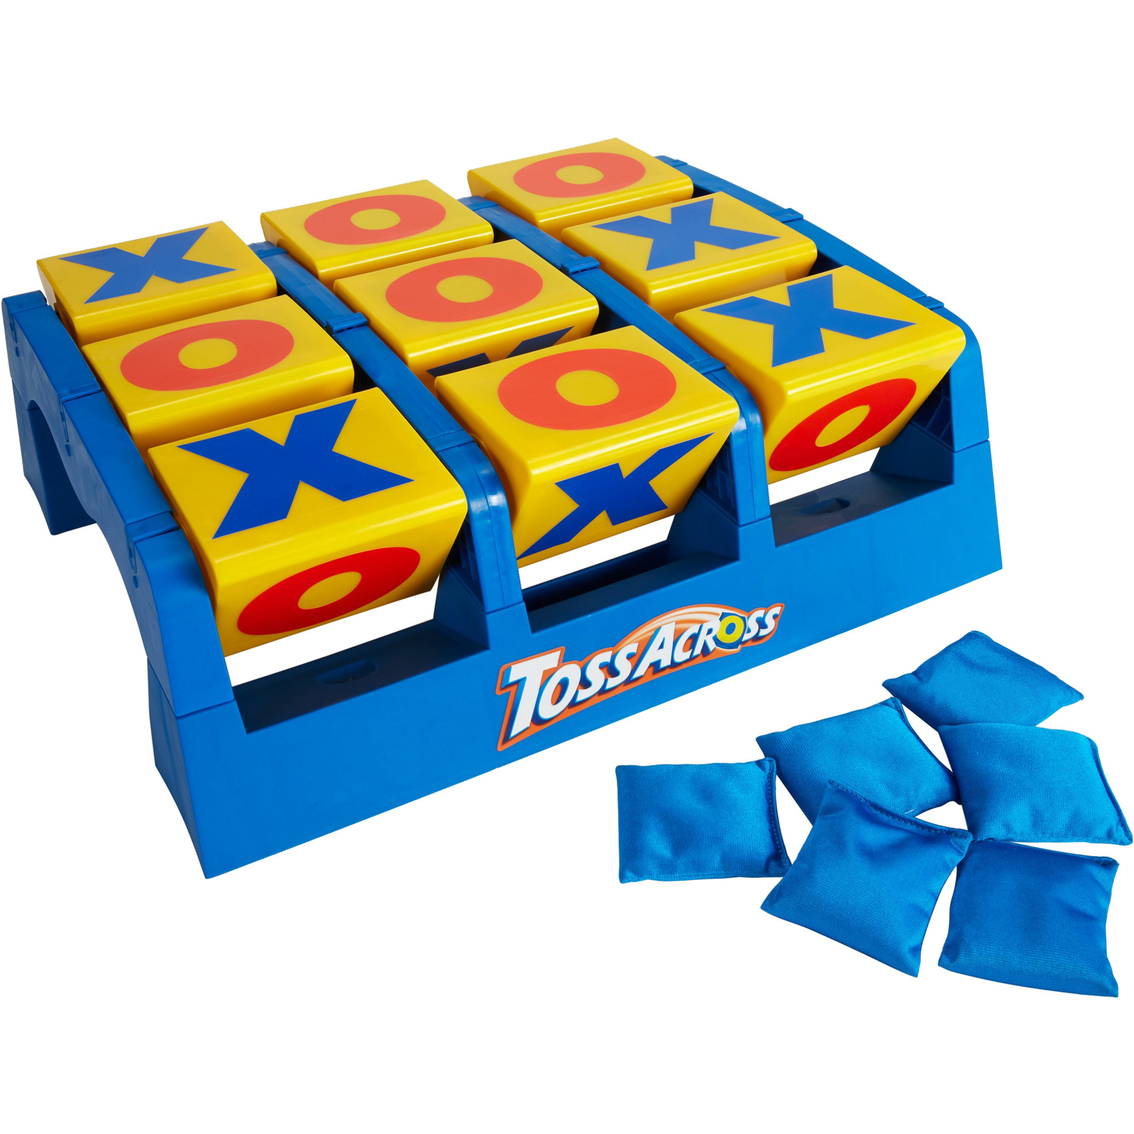 Mattel Toss Across Tic Tac Toe Game - Image 2 of 3